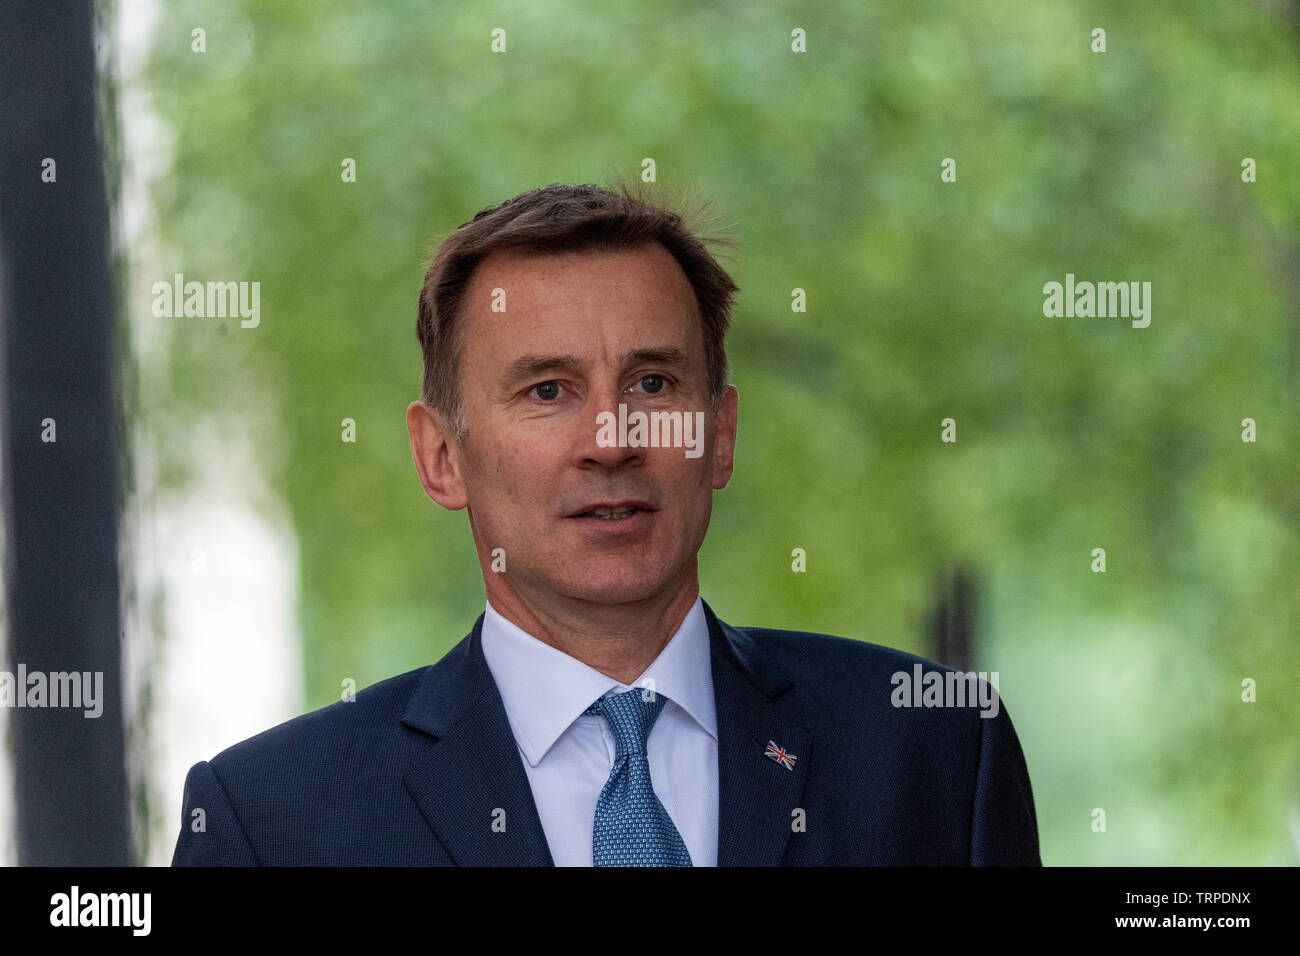 London, 11. Juni 2019, Jeremy Hunt MP PC, Außenminister, kommt an einer Kabinettssitzung am 10 Downing Street, London Credit Ian Davidson/Alamy leben Nachrichten Stockfoto